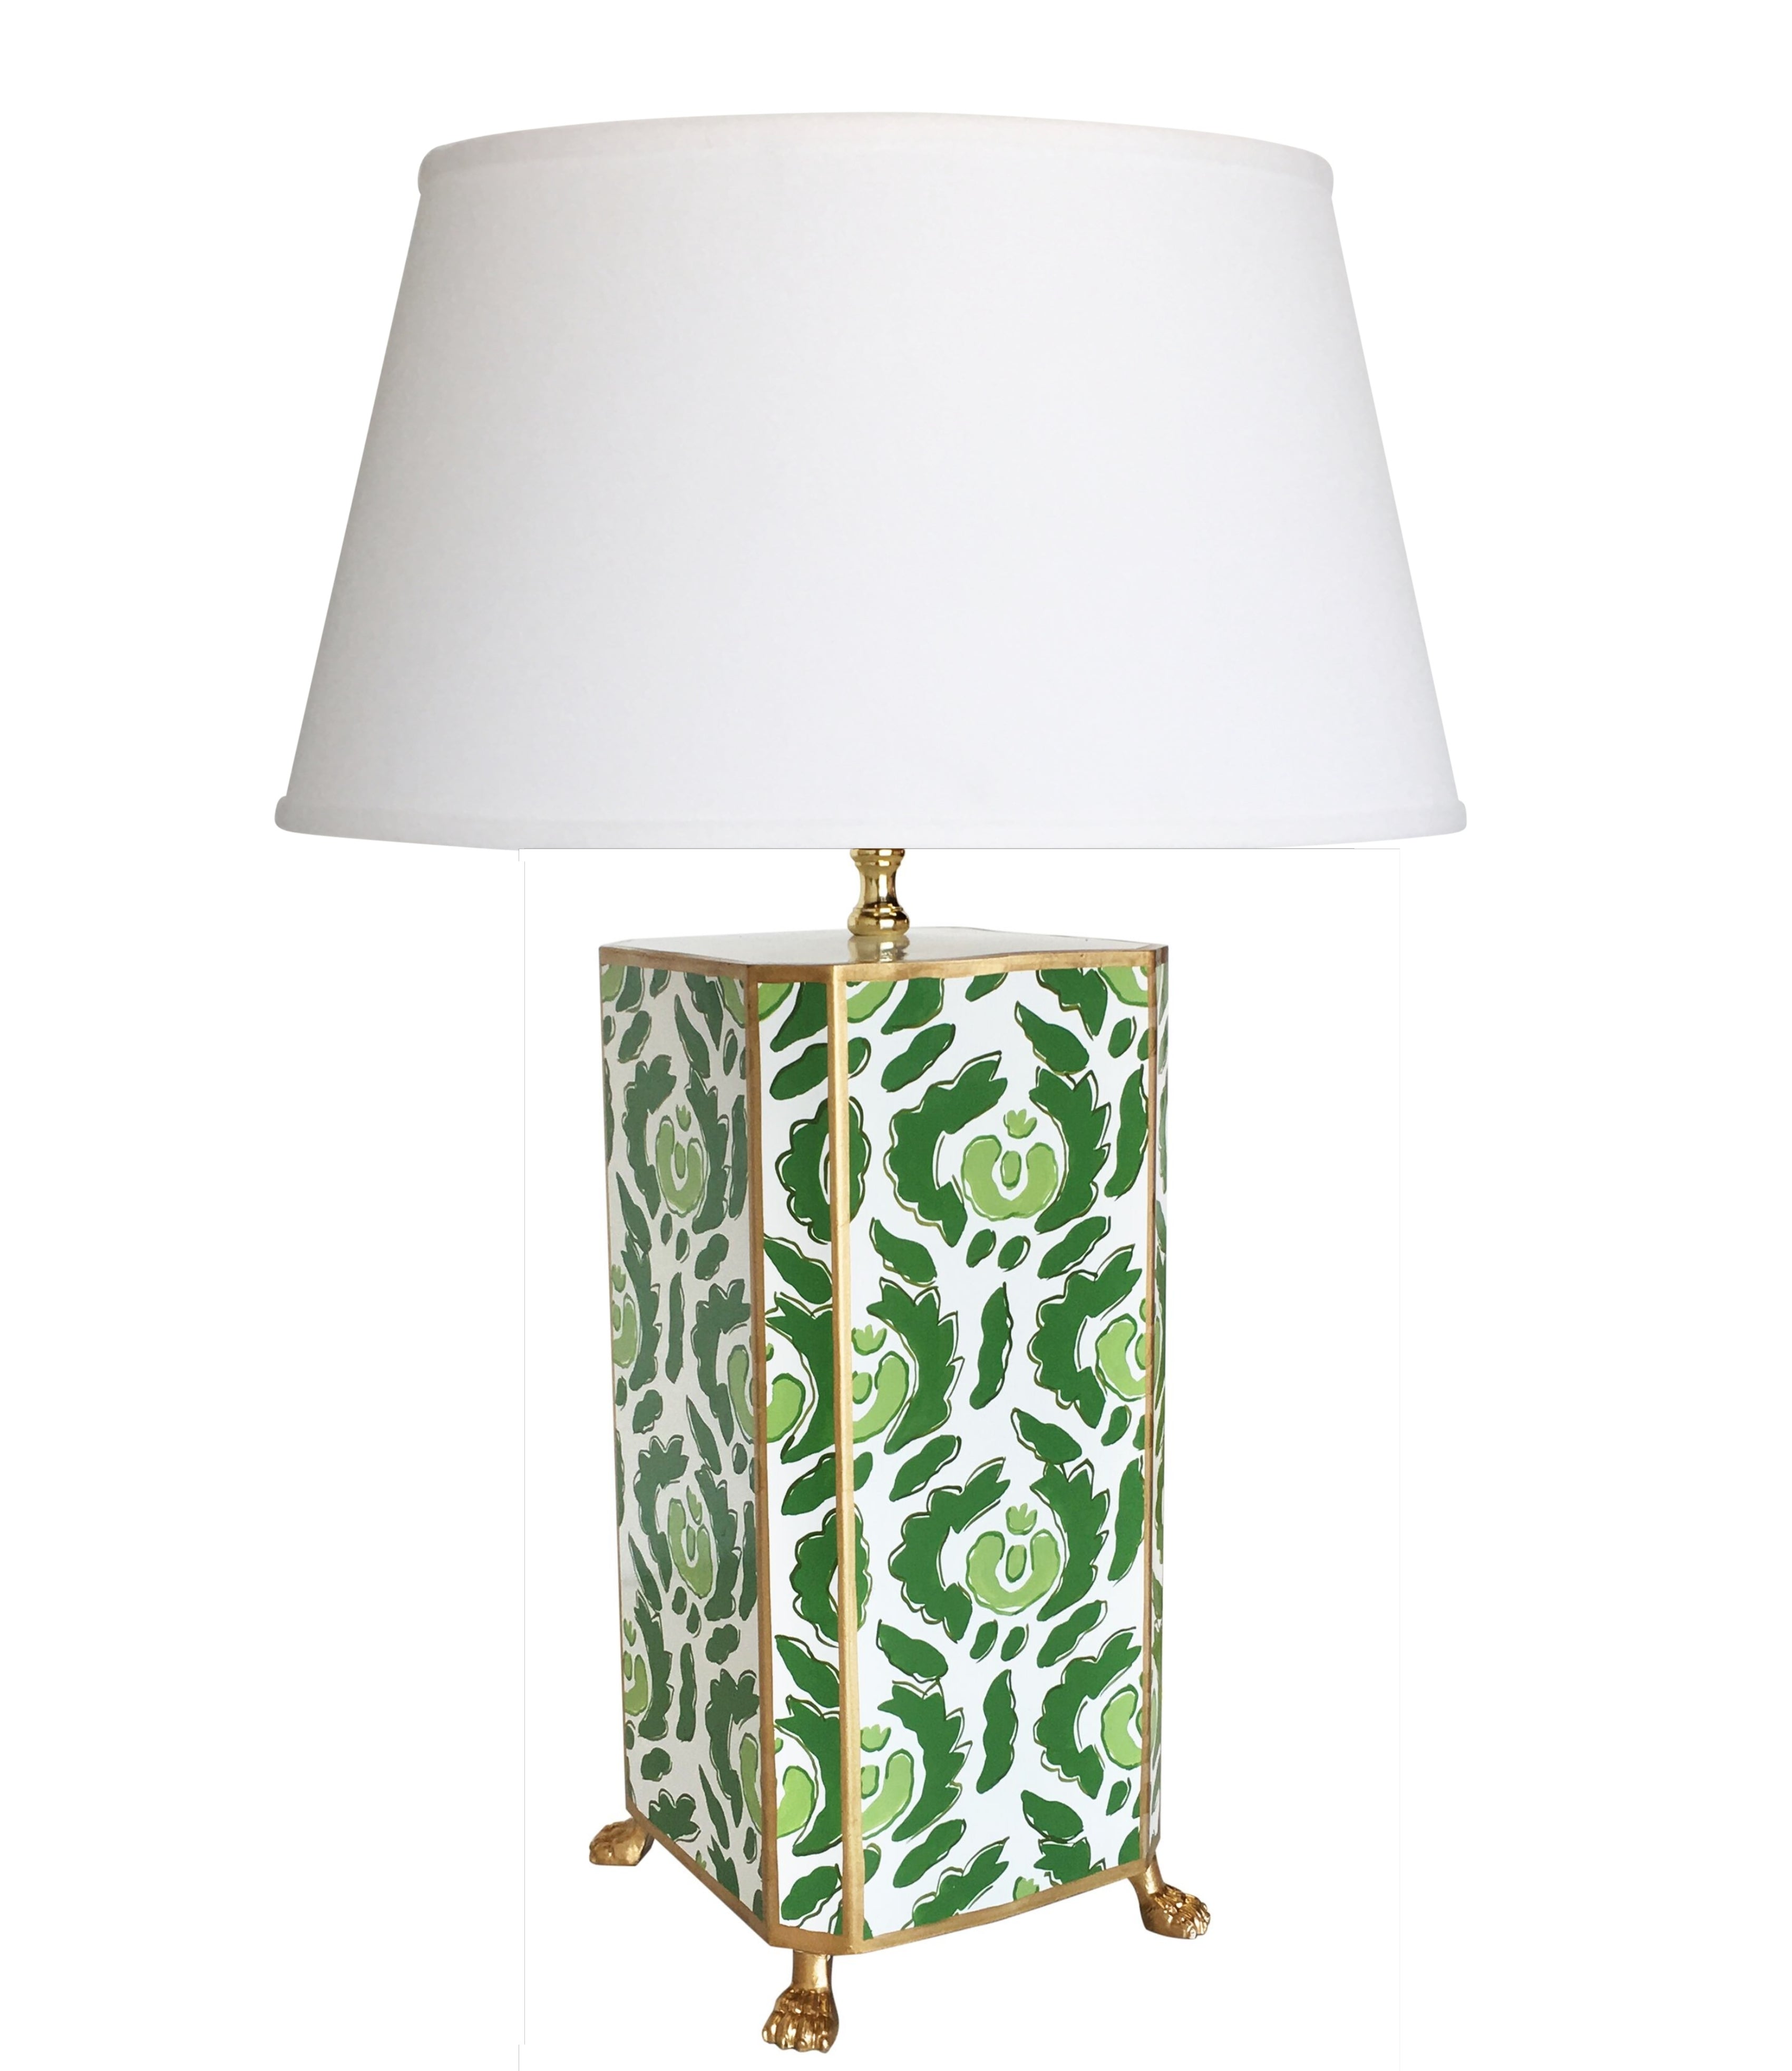 Dana Gibson Beaufont in Green Table Lamp